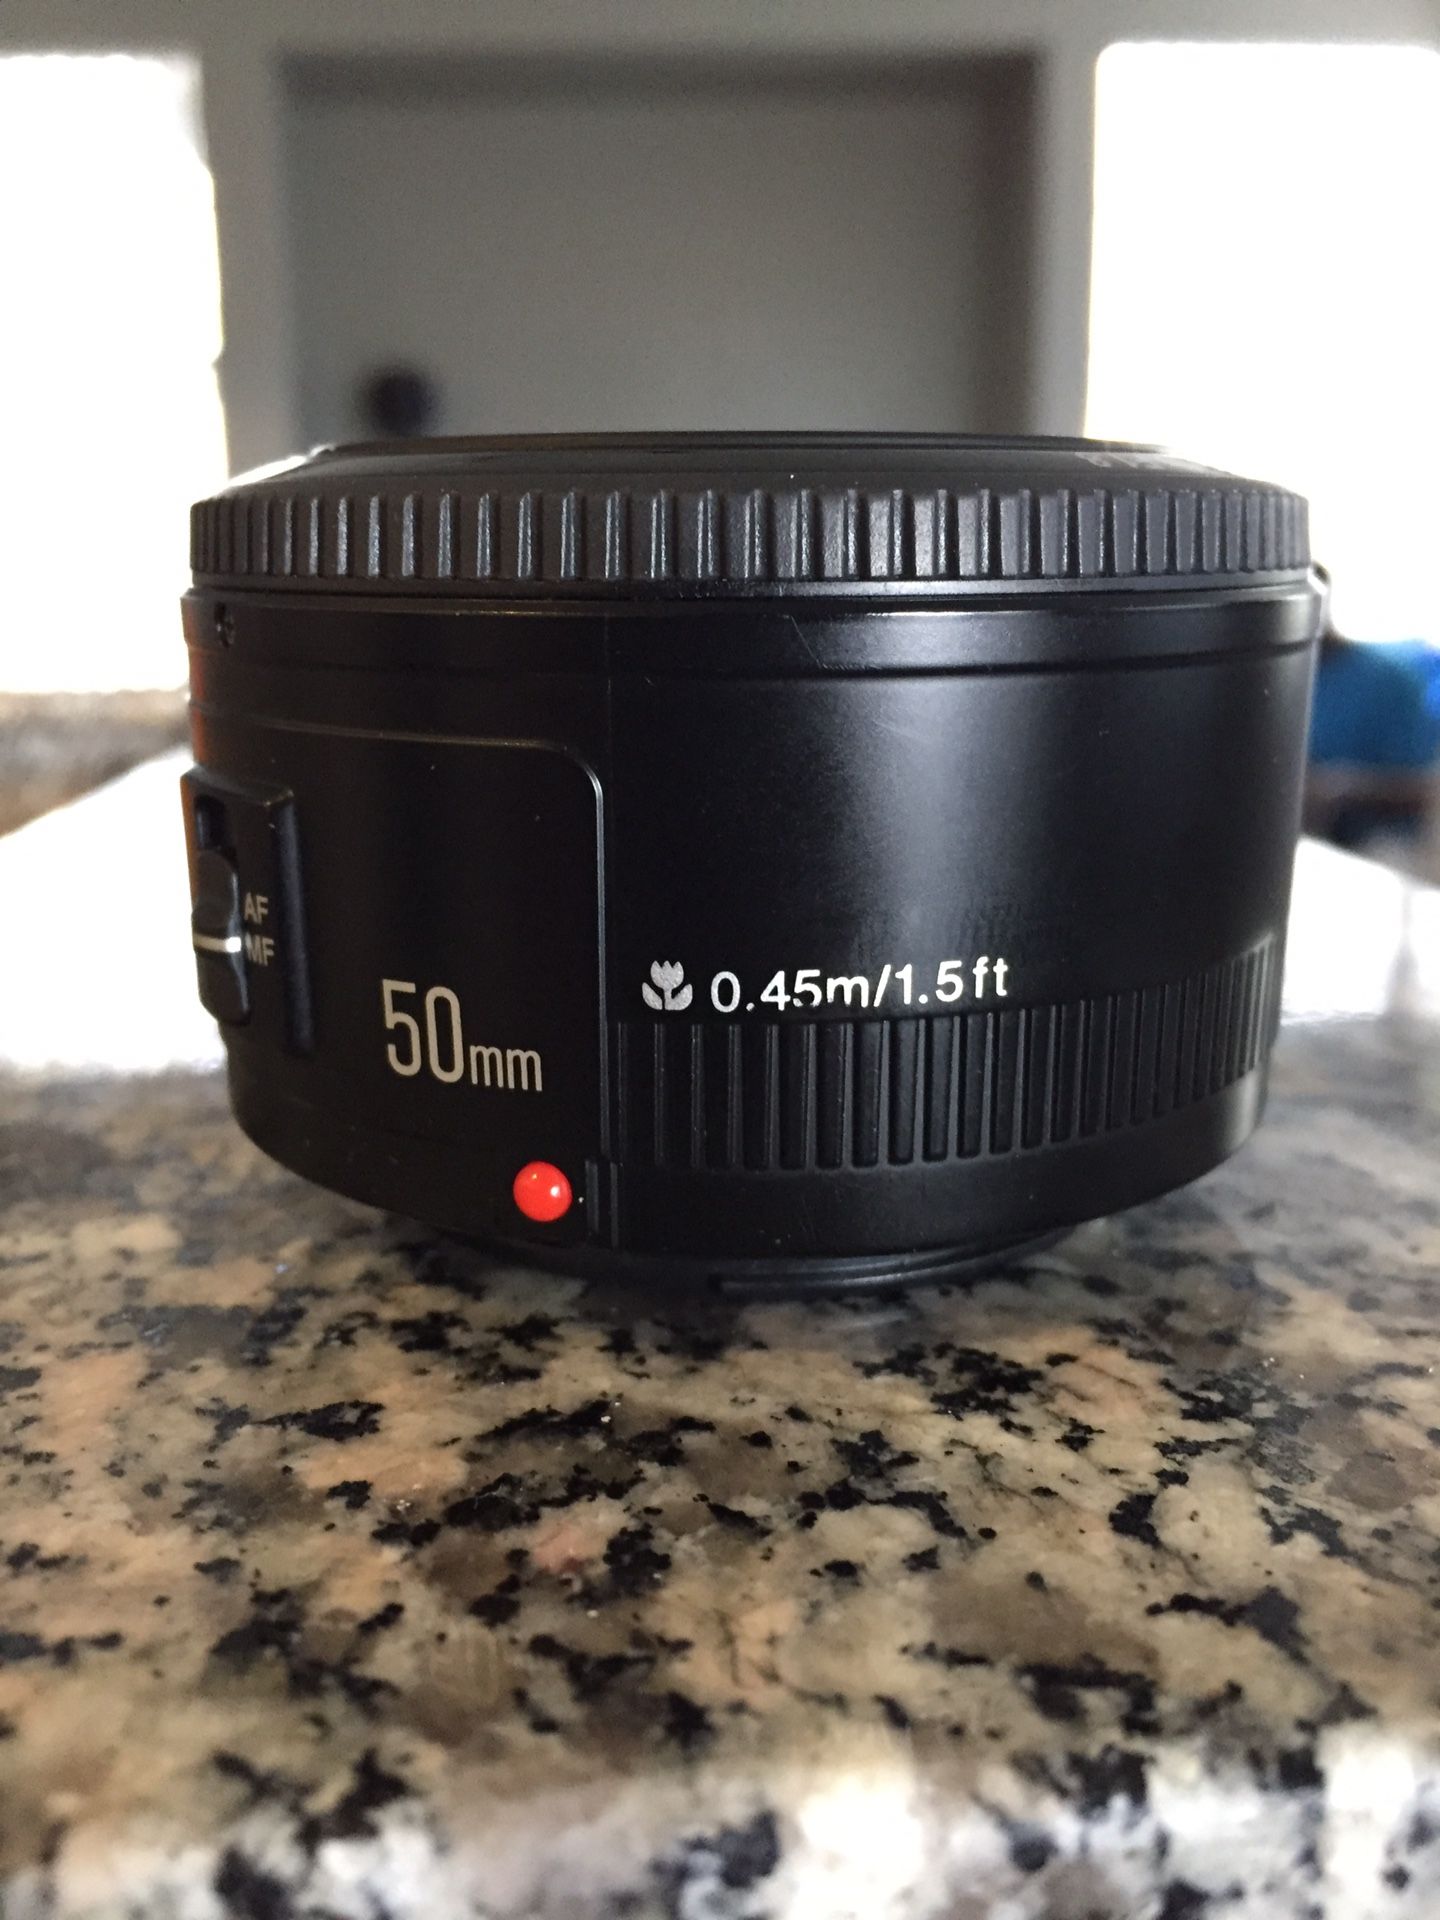 Yongnuo 50mm canon mount lens 1.5 ft